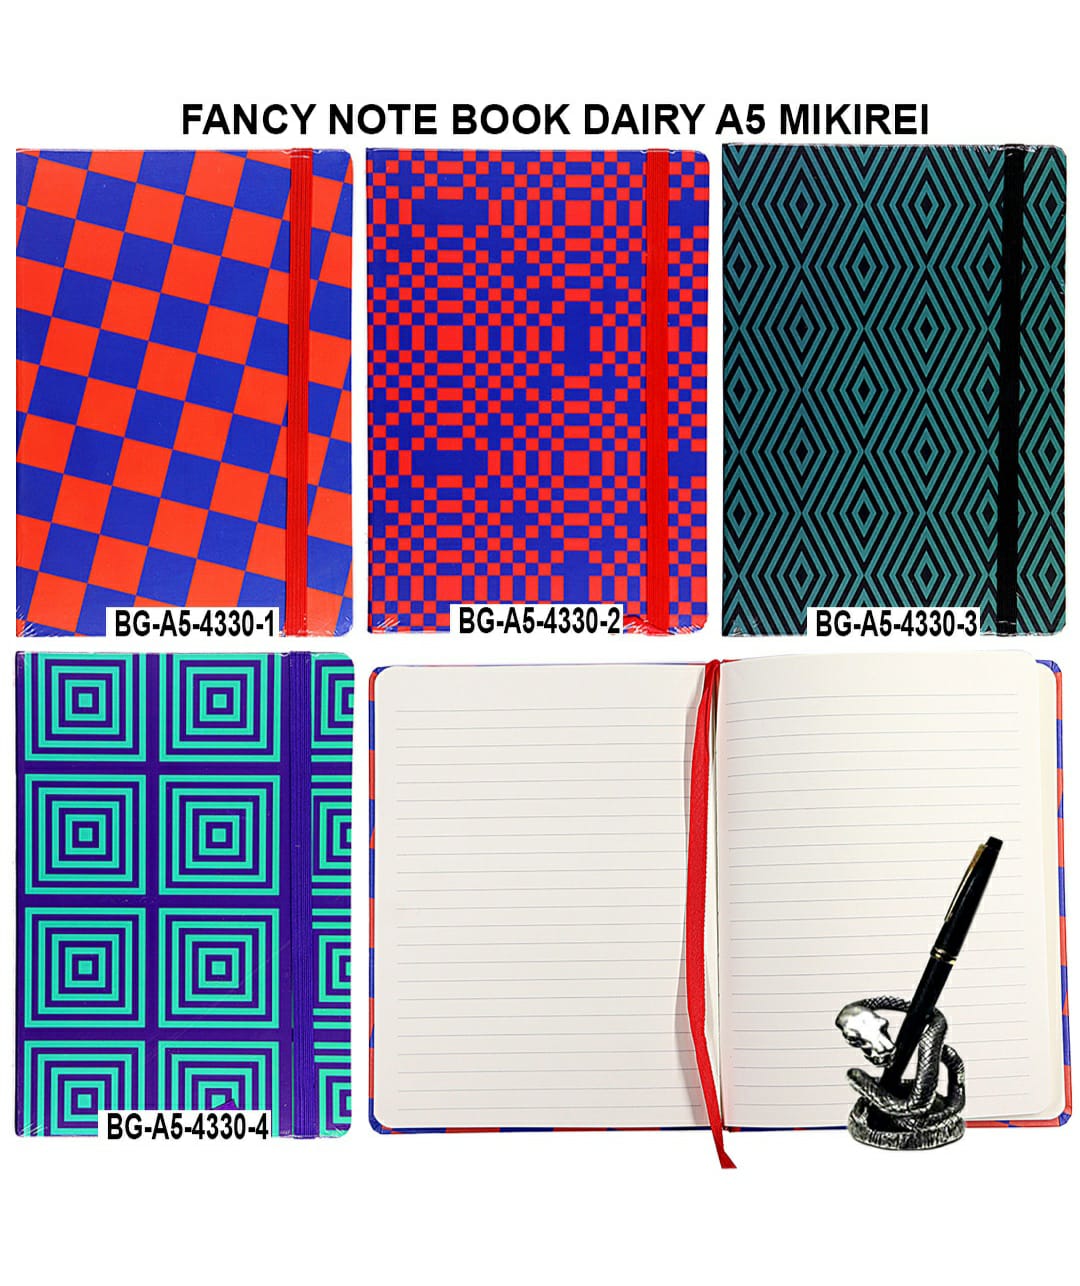 Note Book Dairy A5 Mikirei A5-5433 | INKARTO